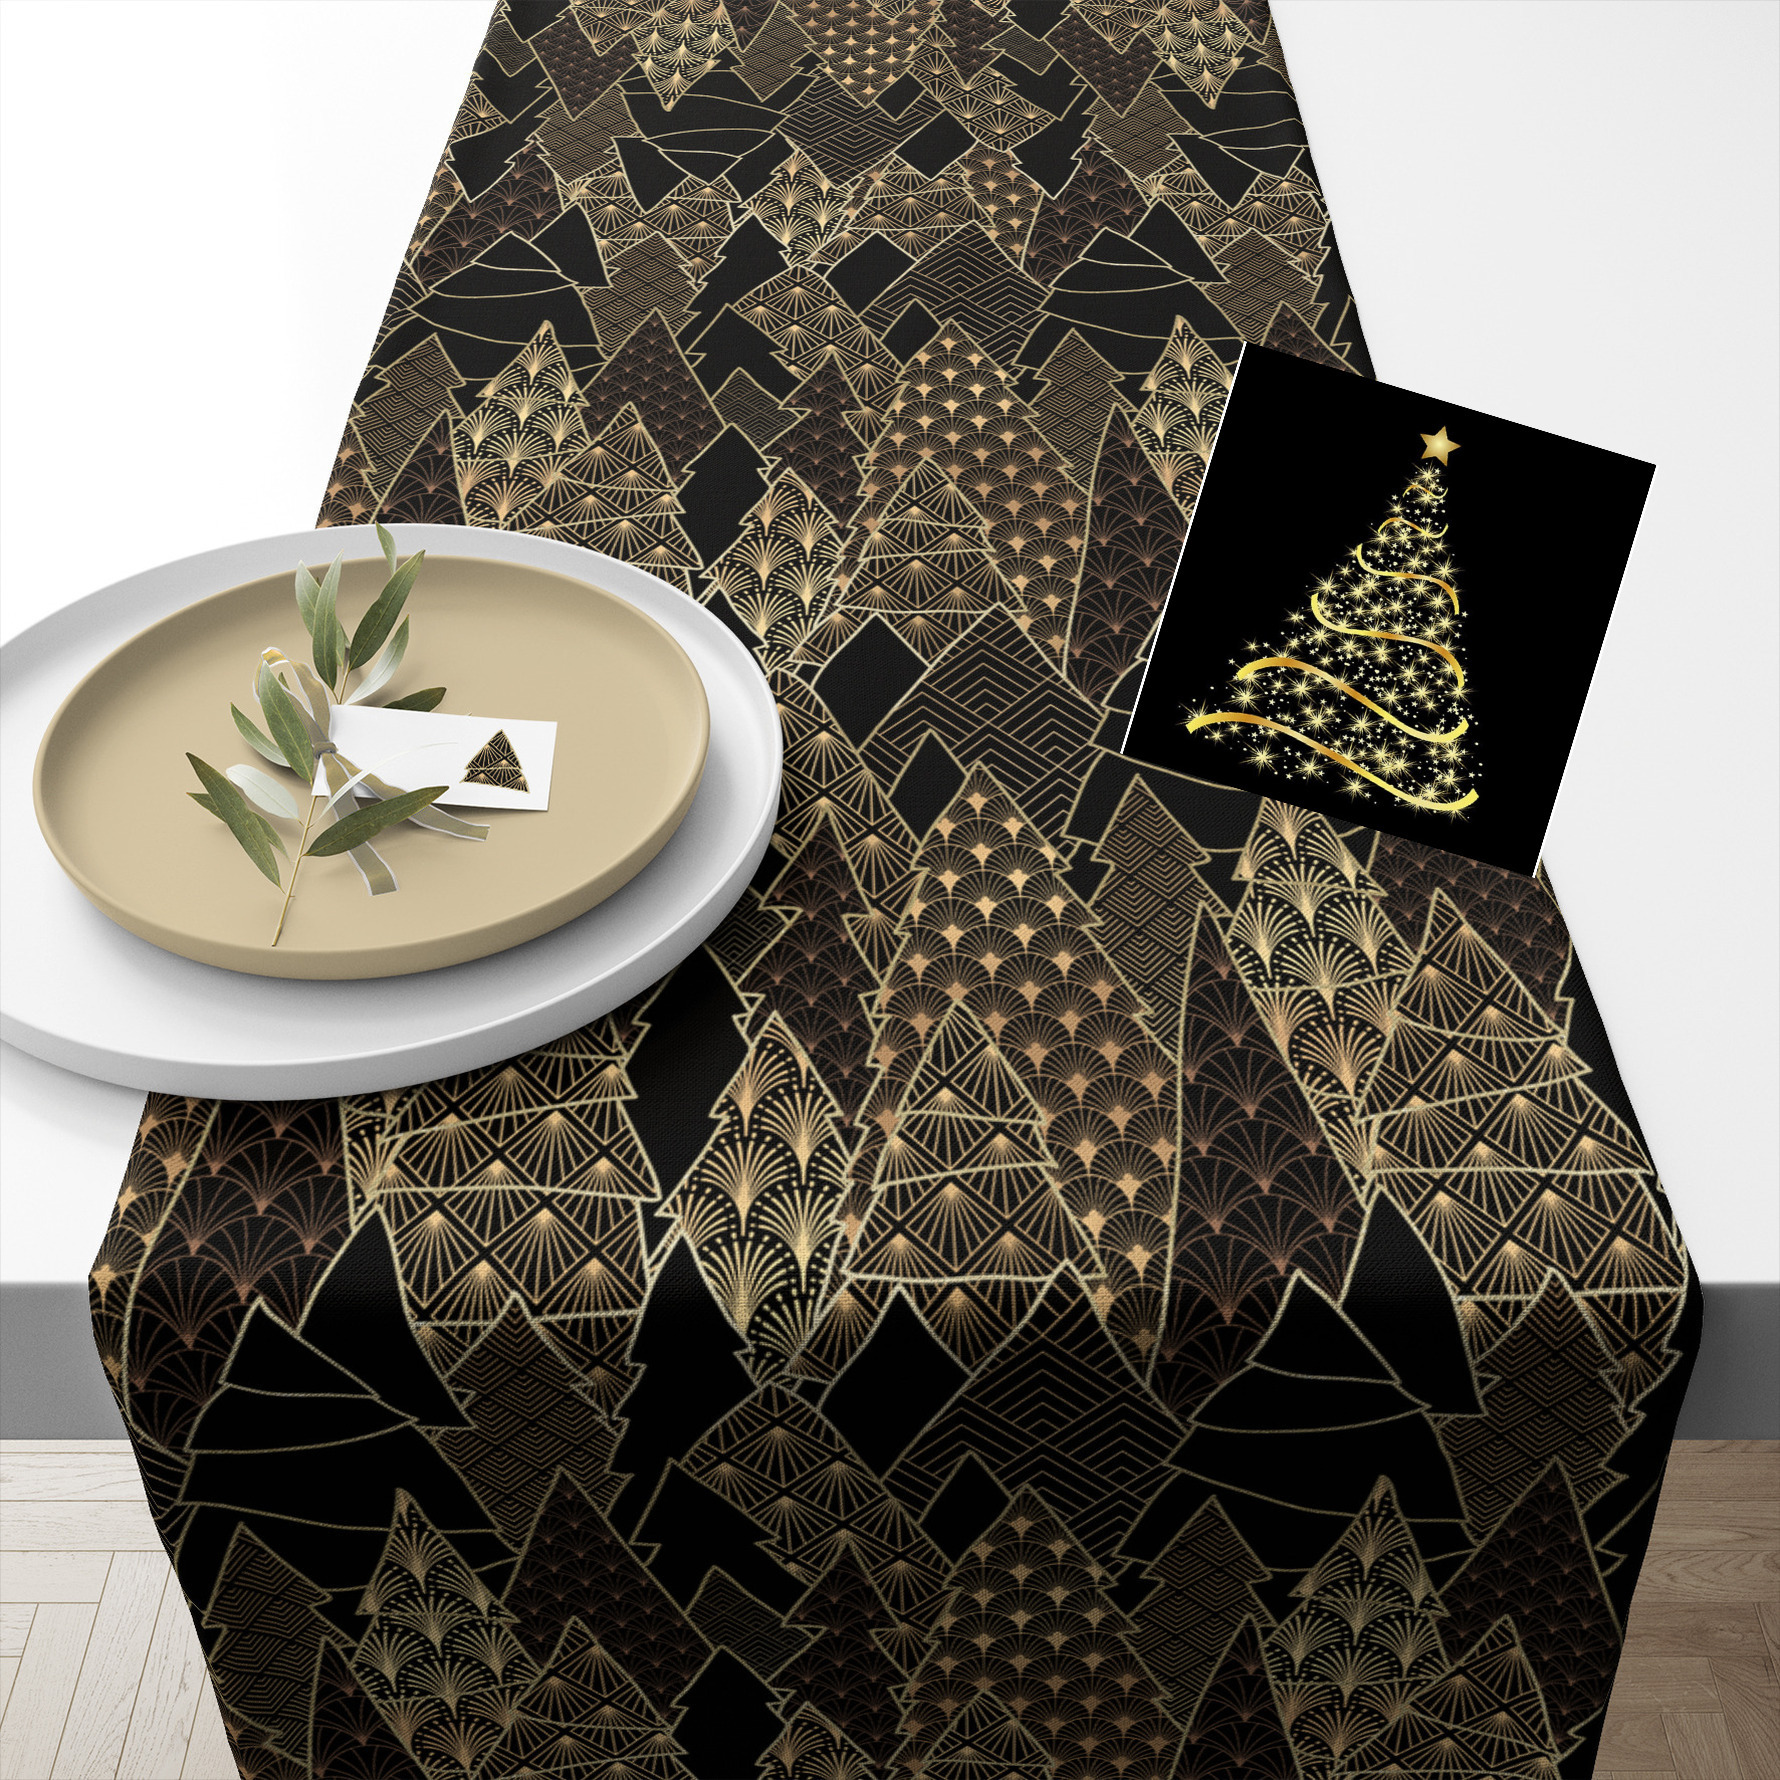 Atmosphera Tafelloper x 150 cm met 20x st servetten - kerst thema - zwart/goud -